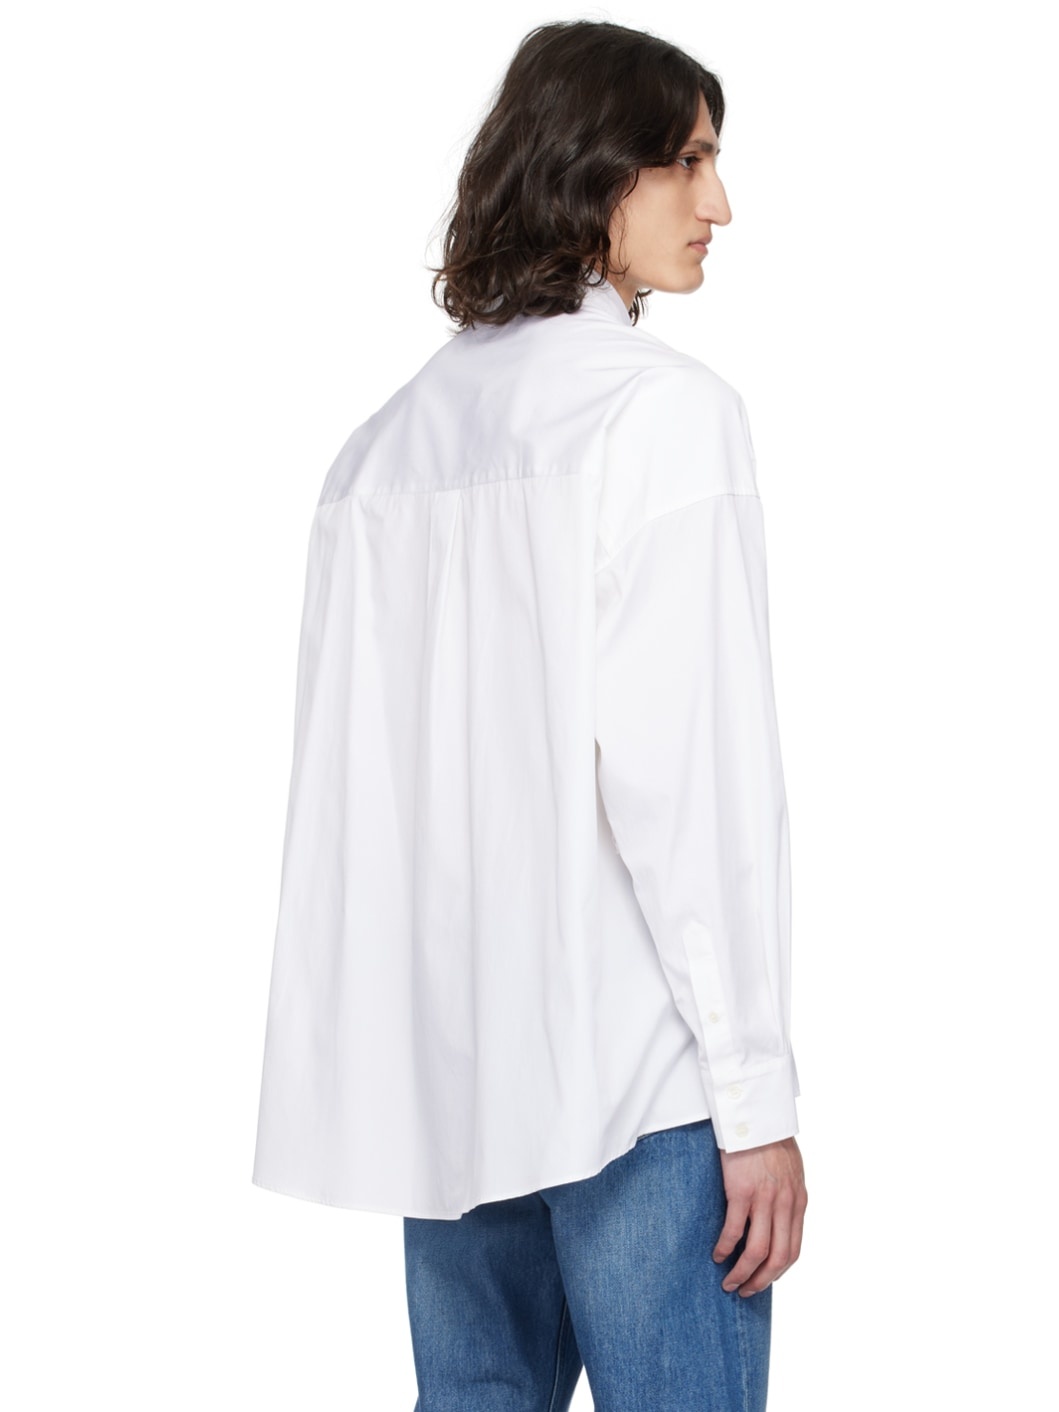 White Natacha Ramsay-Levi Edition Warvol Shirt - 3